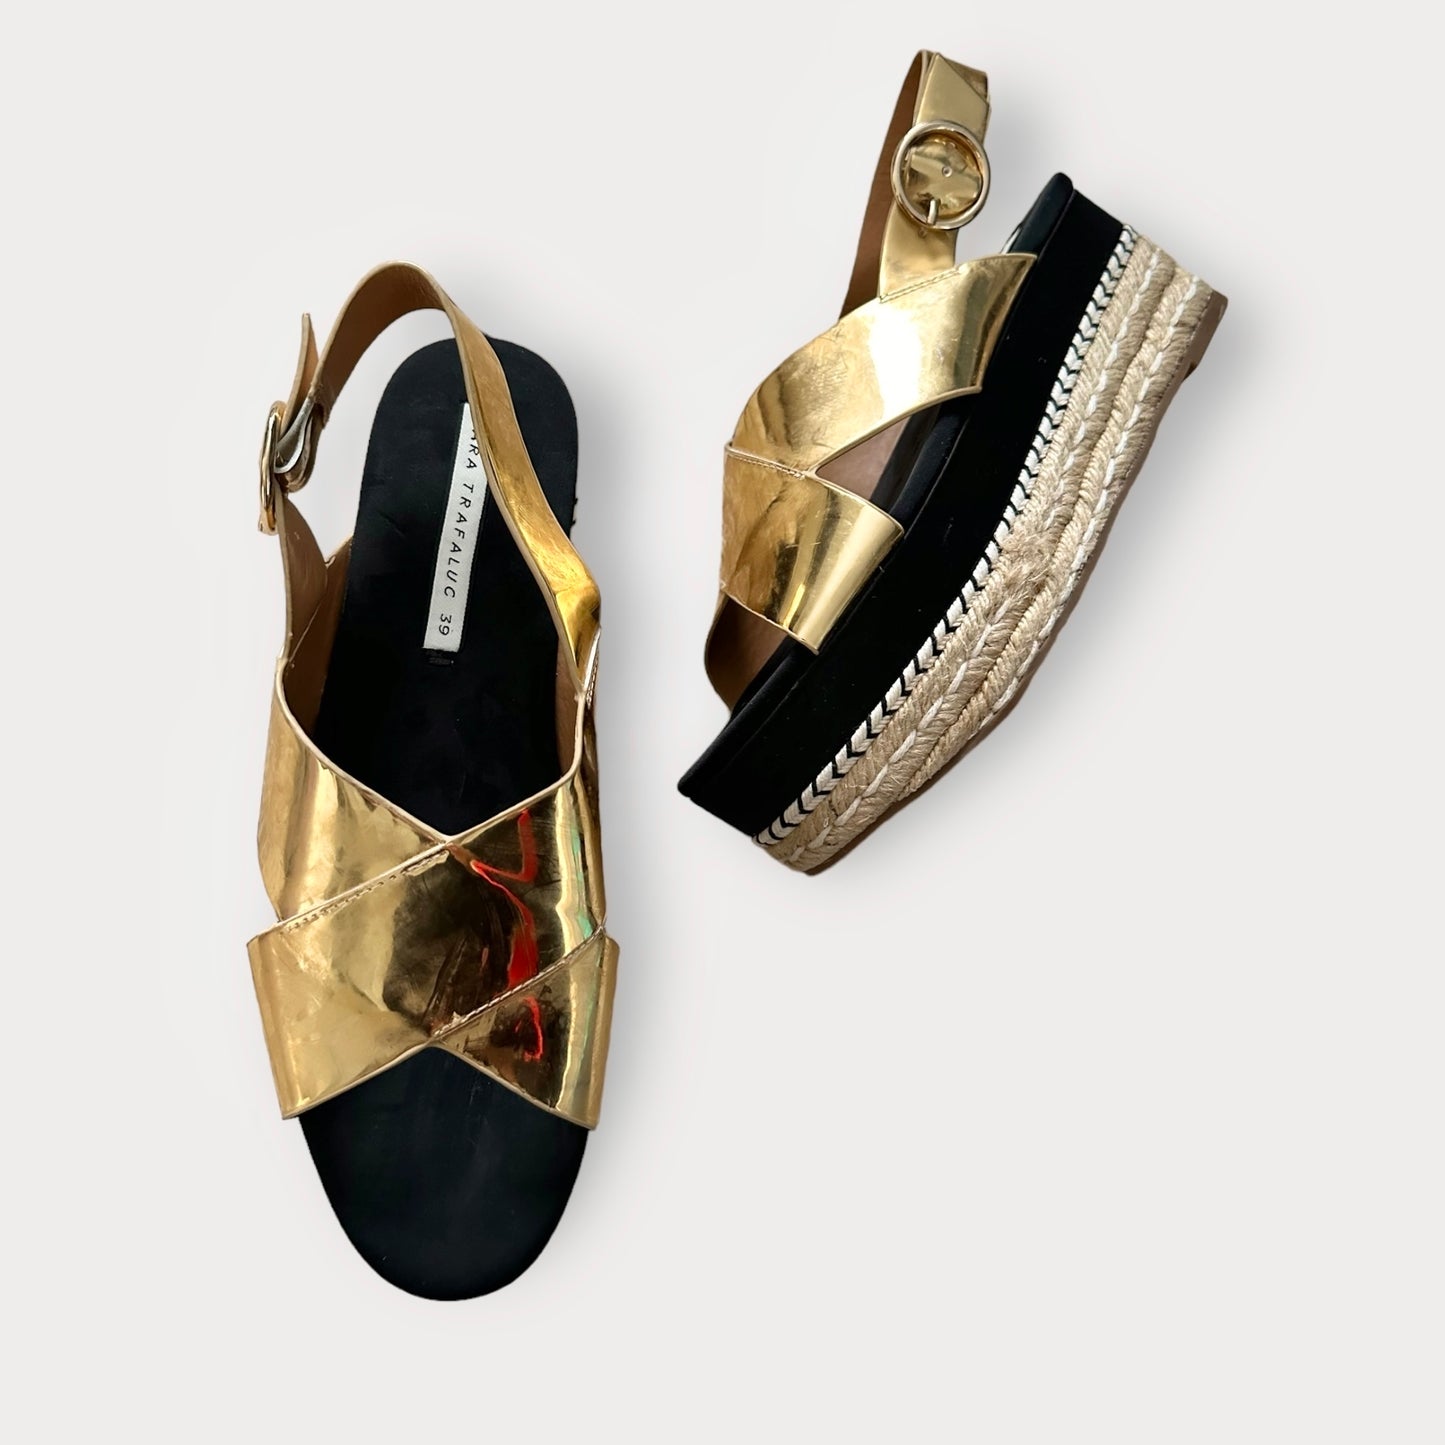 Zara chrome metallic cross over platform flatform sandals shoes new UK 6 EU 39